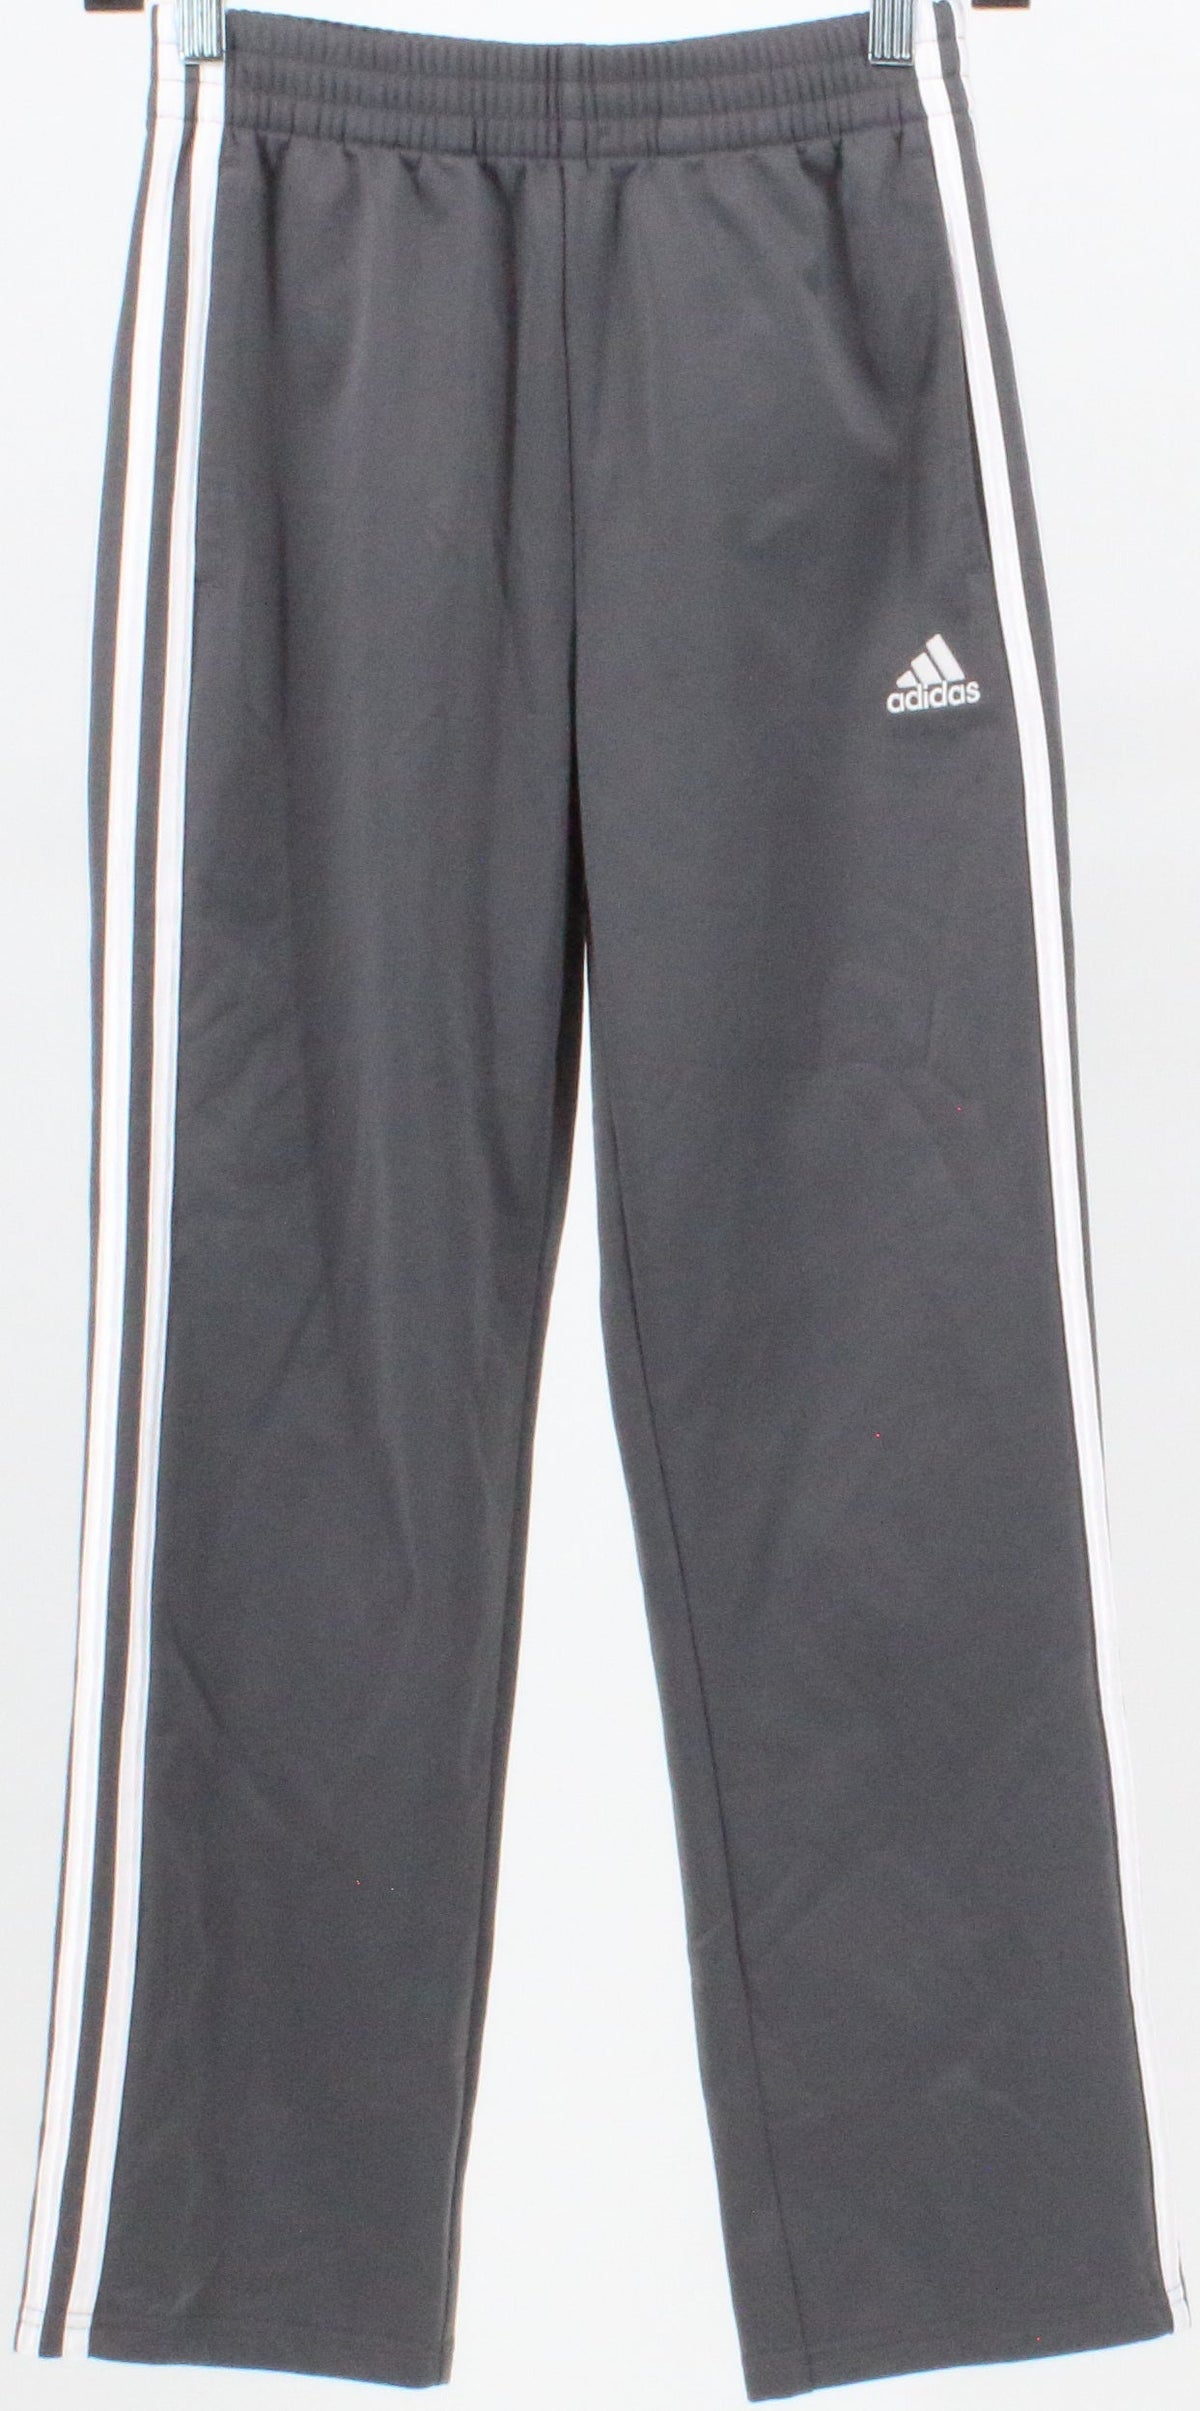 Adidas Youth Dark Grey and White Active Pants